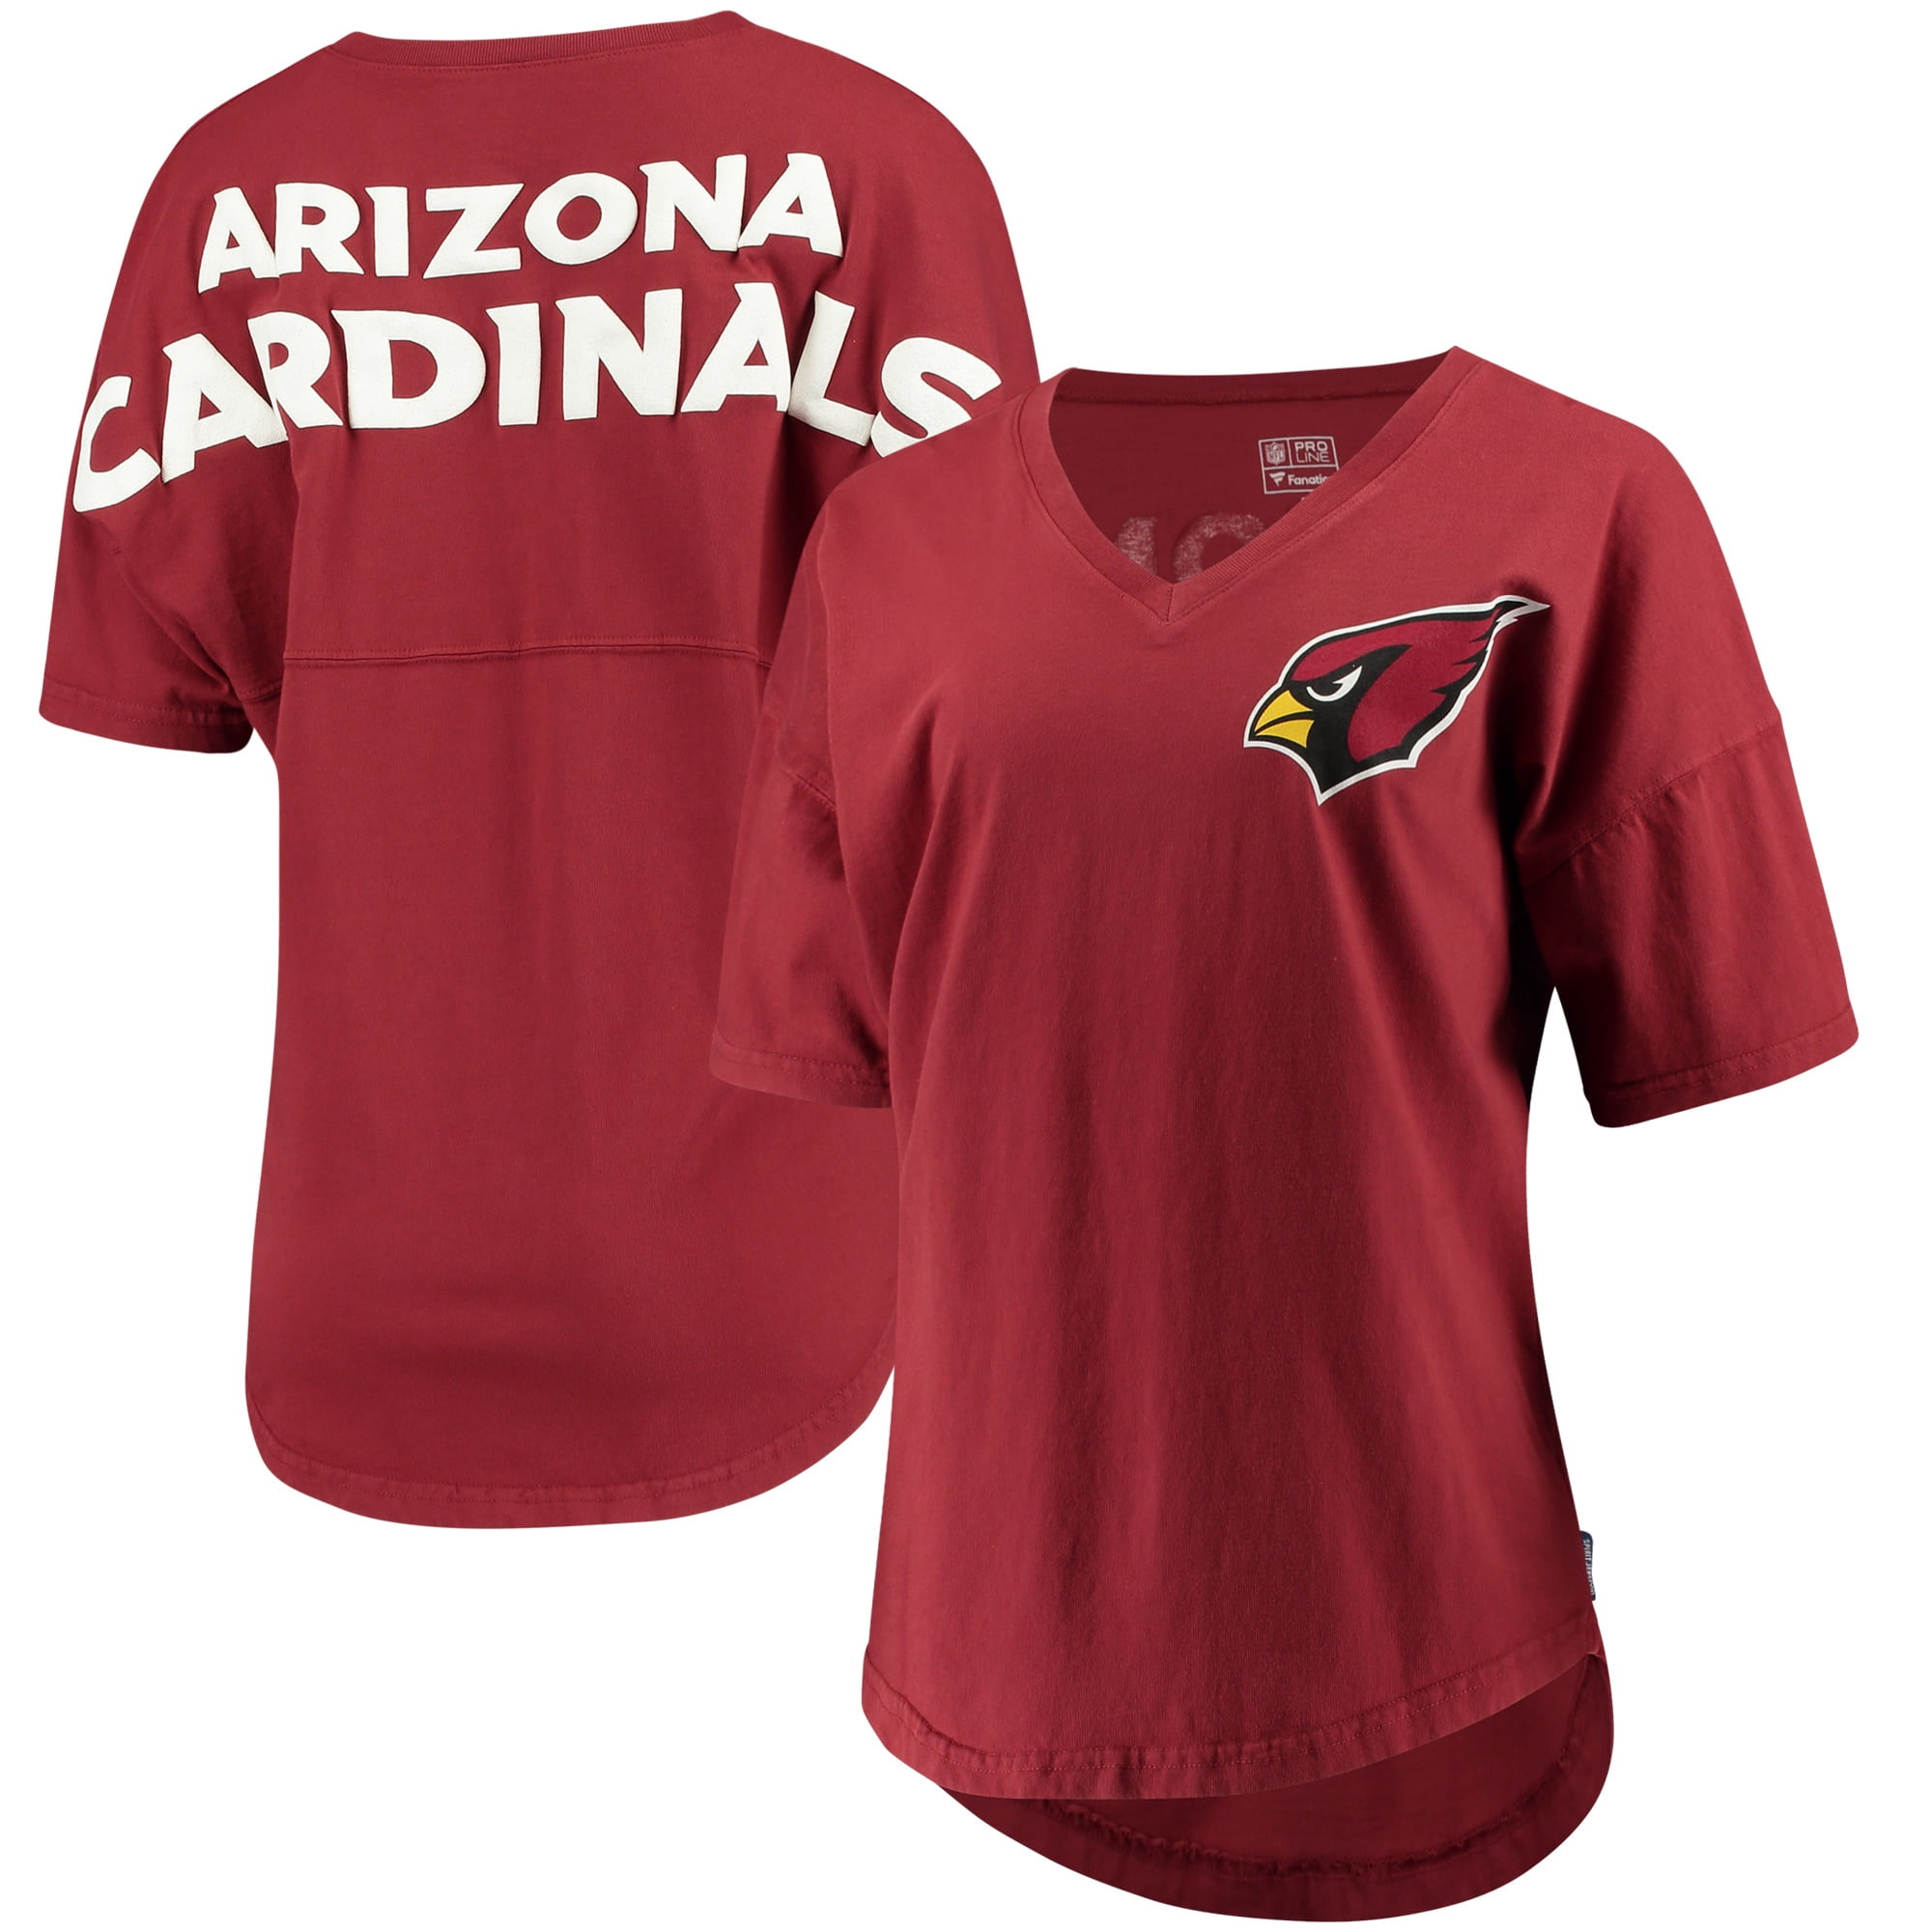 cardinals spirit jersey